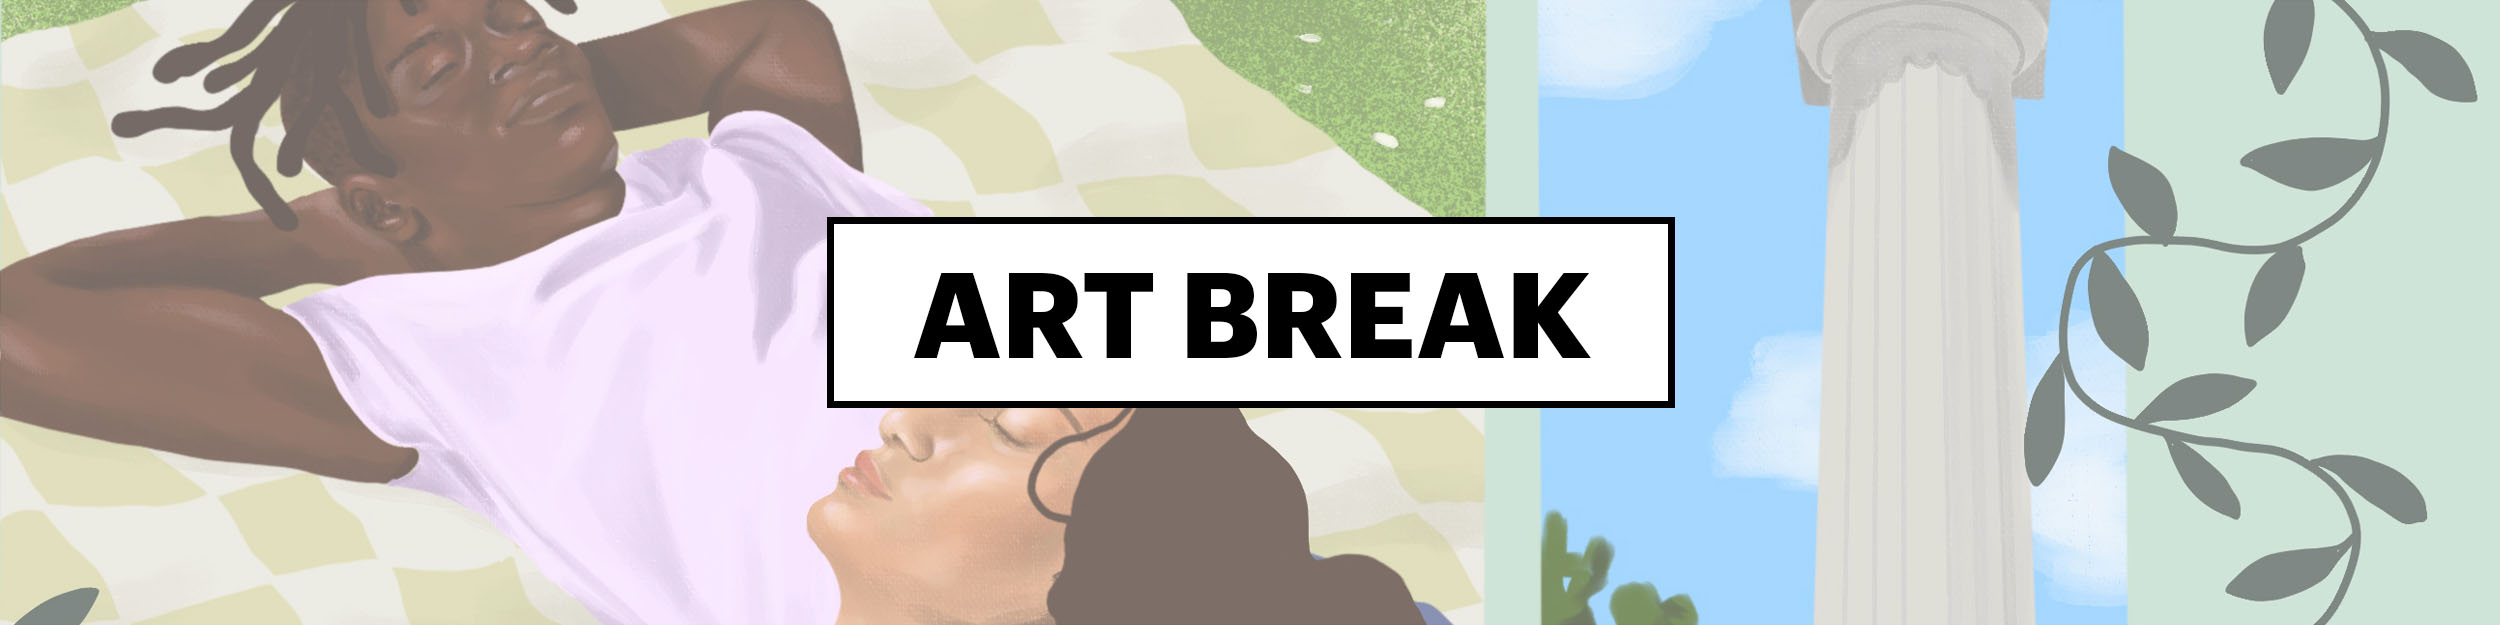 ART BREAK header with background image of artwork of boy and girl lying on picnic blanket